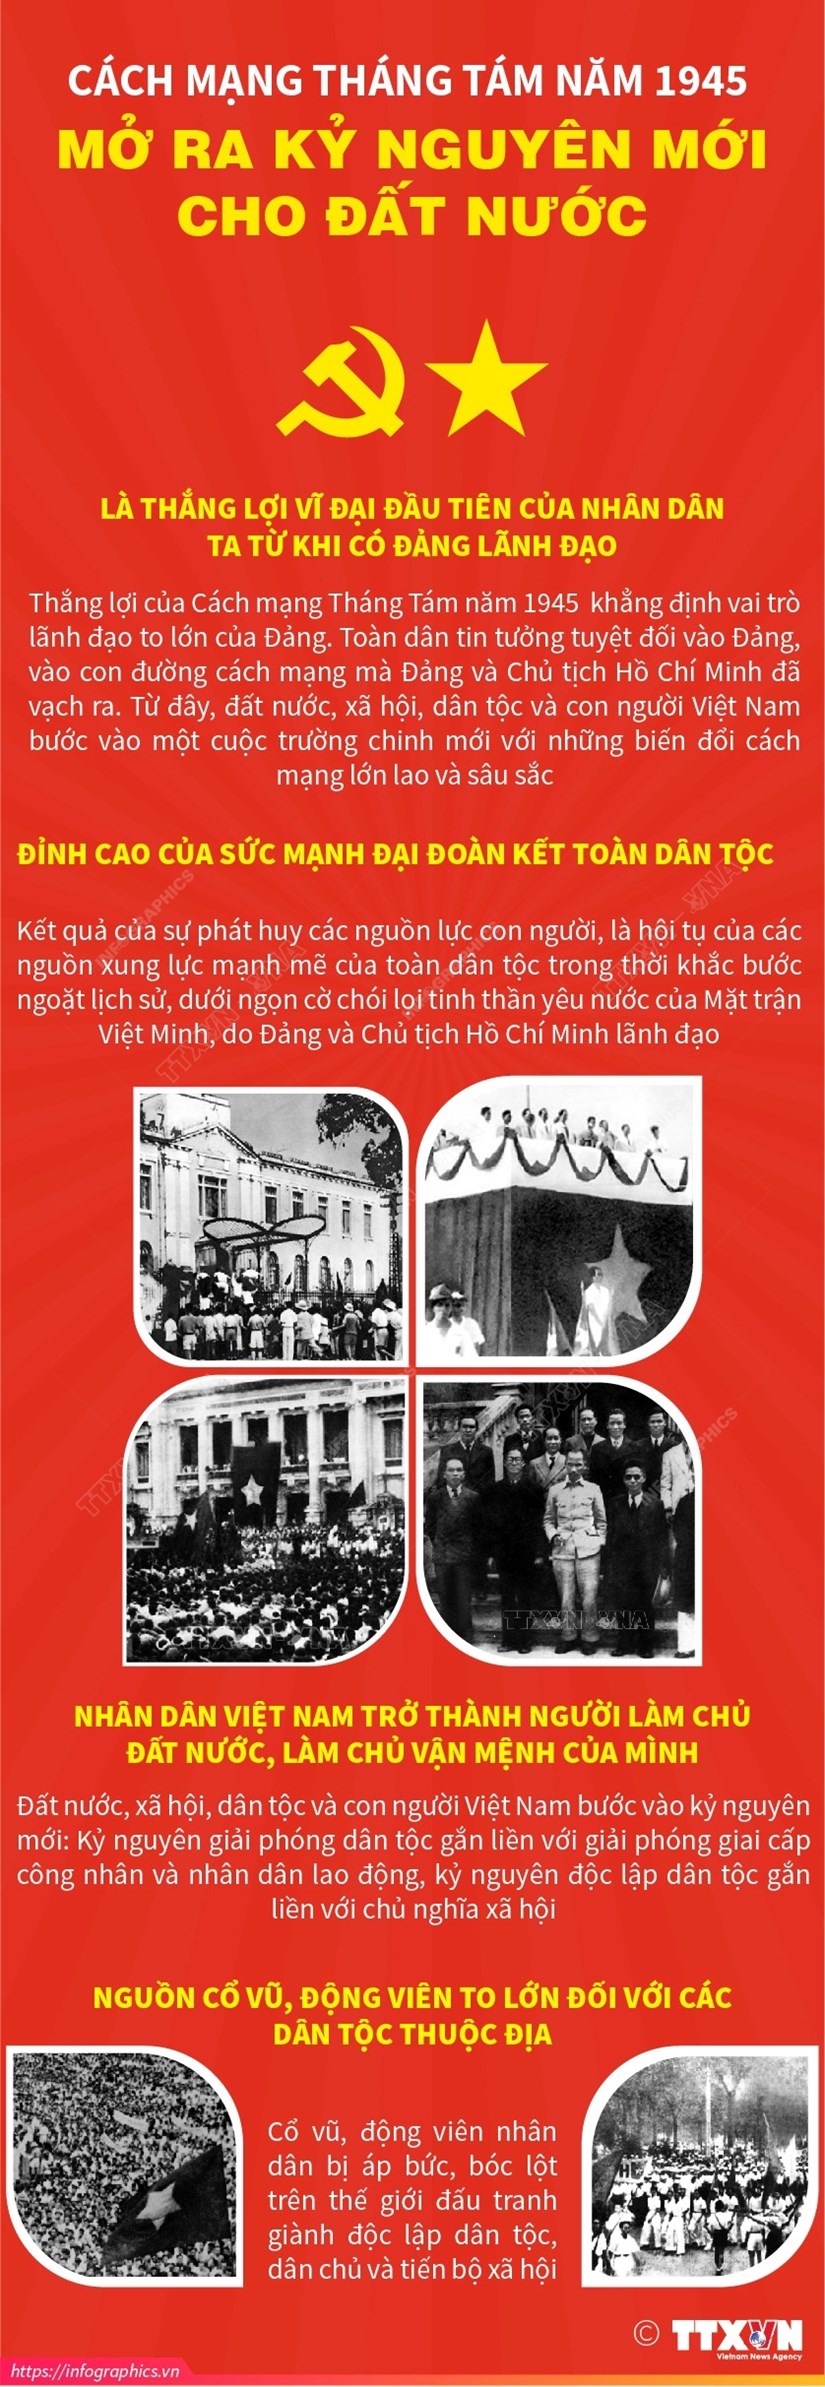 [Infographics] Cach mang Thang Tam: Mo ra ky nguyen moi cho dat nuoc hinh anh 1